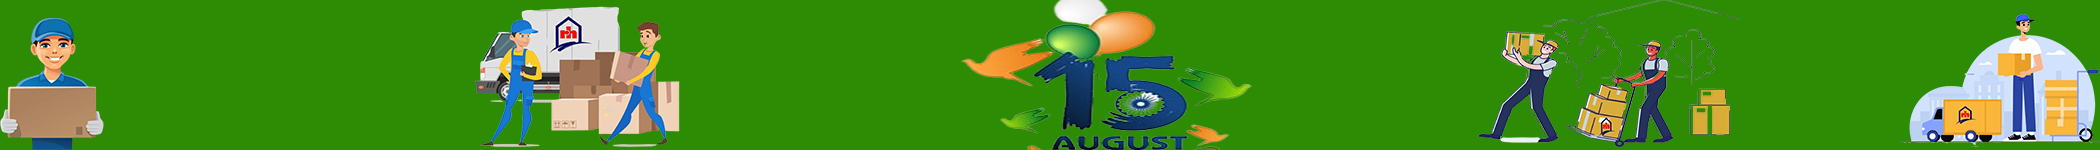 August offer banner